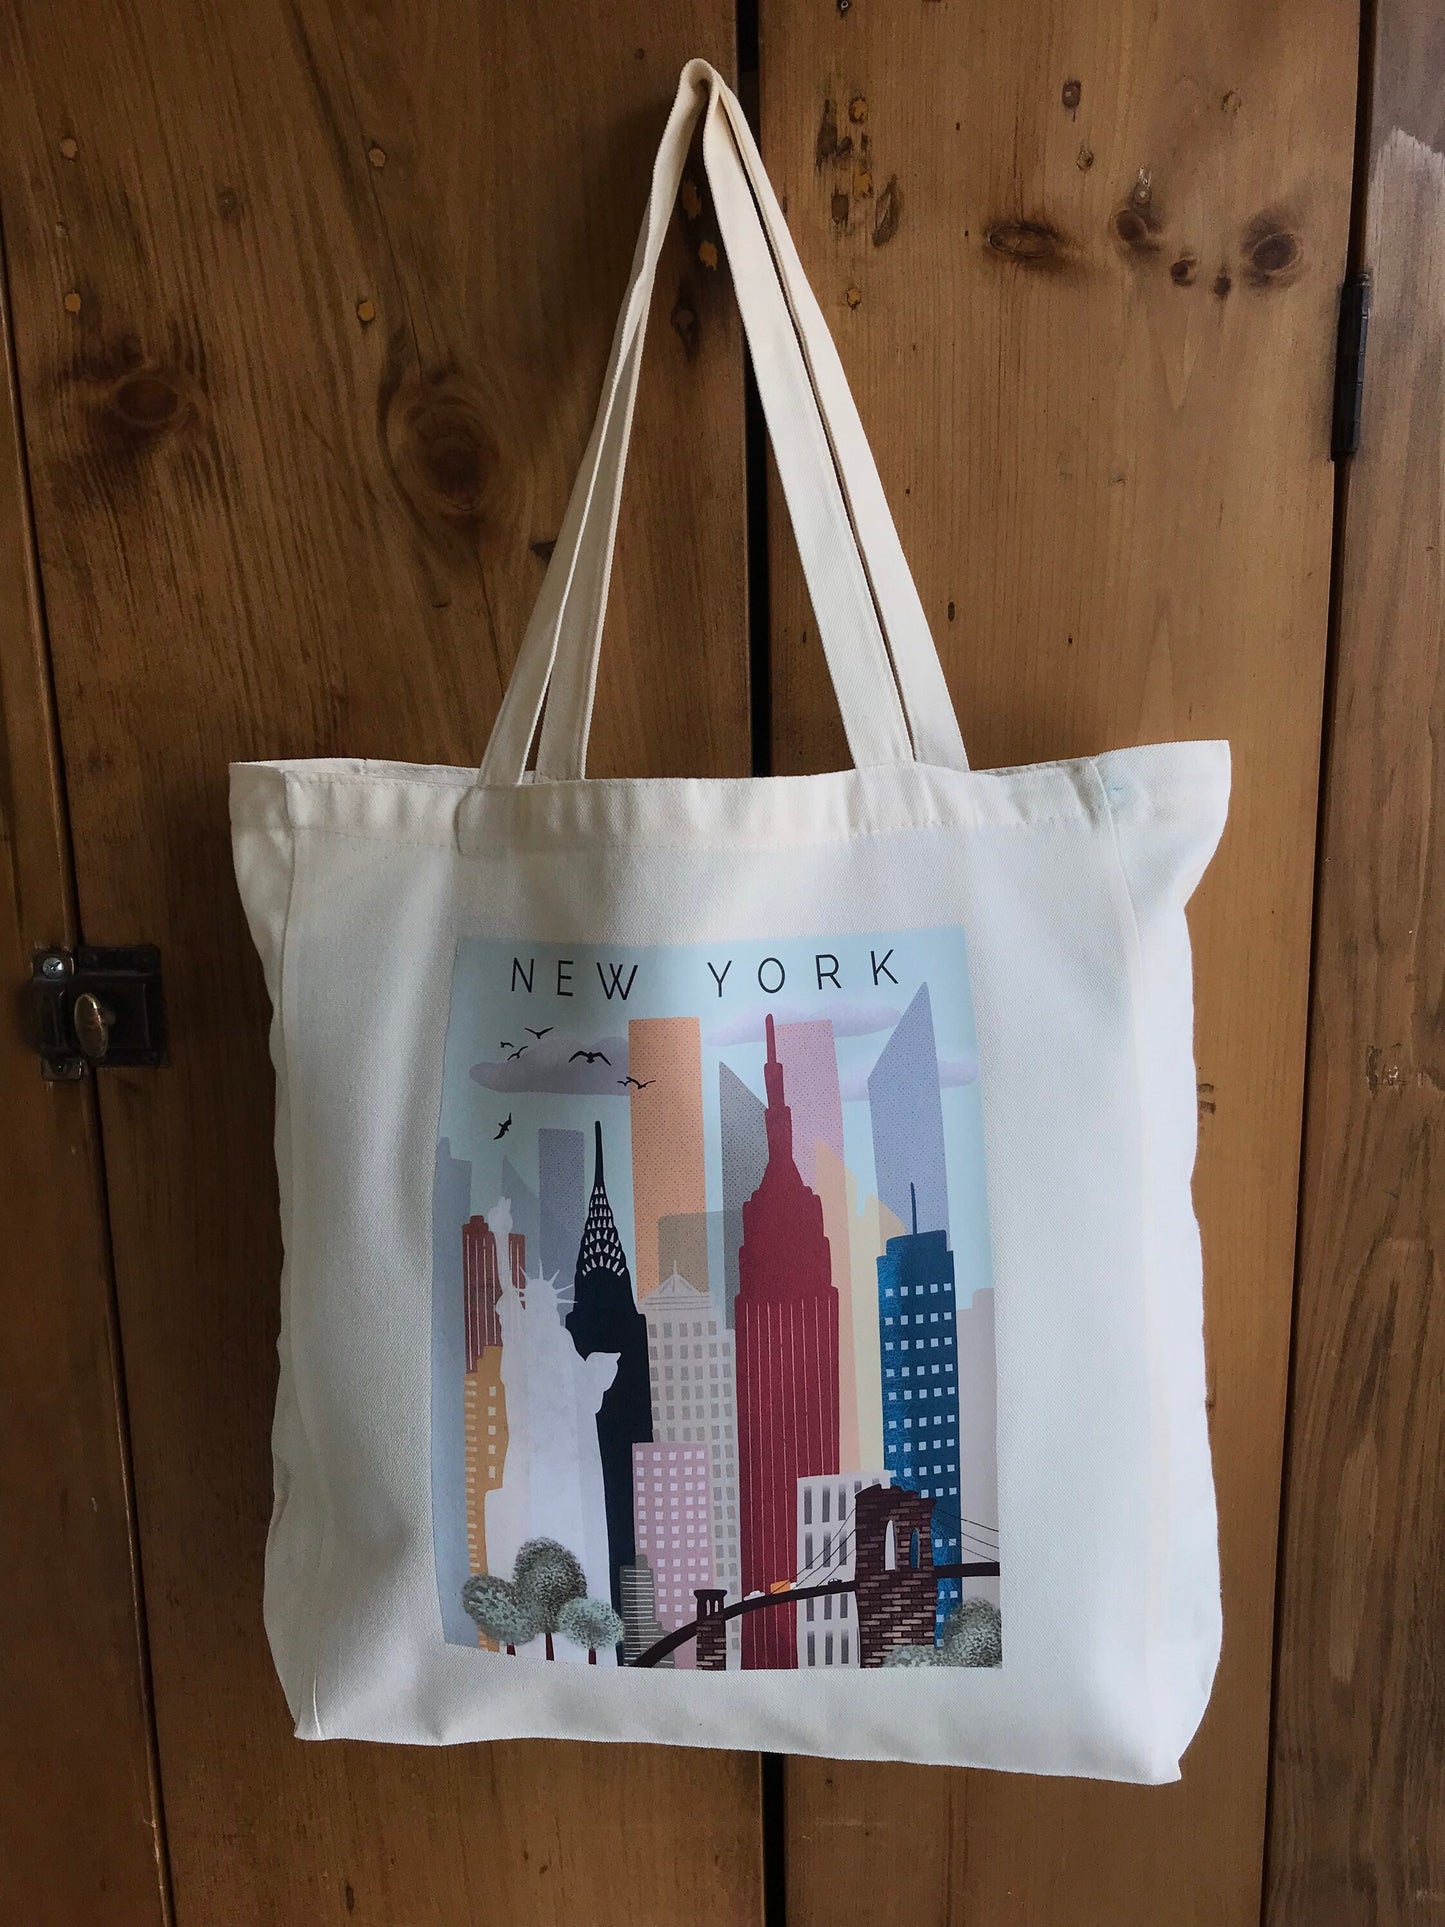 New York City Skyline Tote Bag